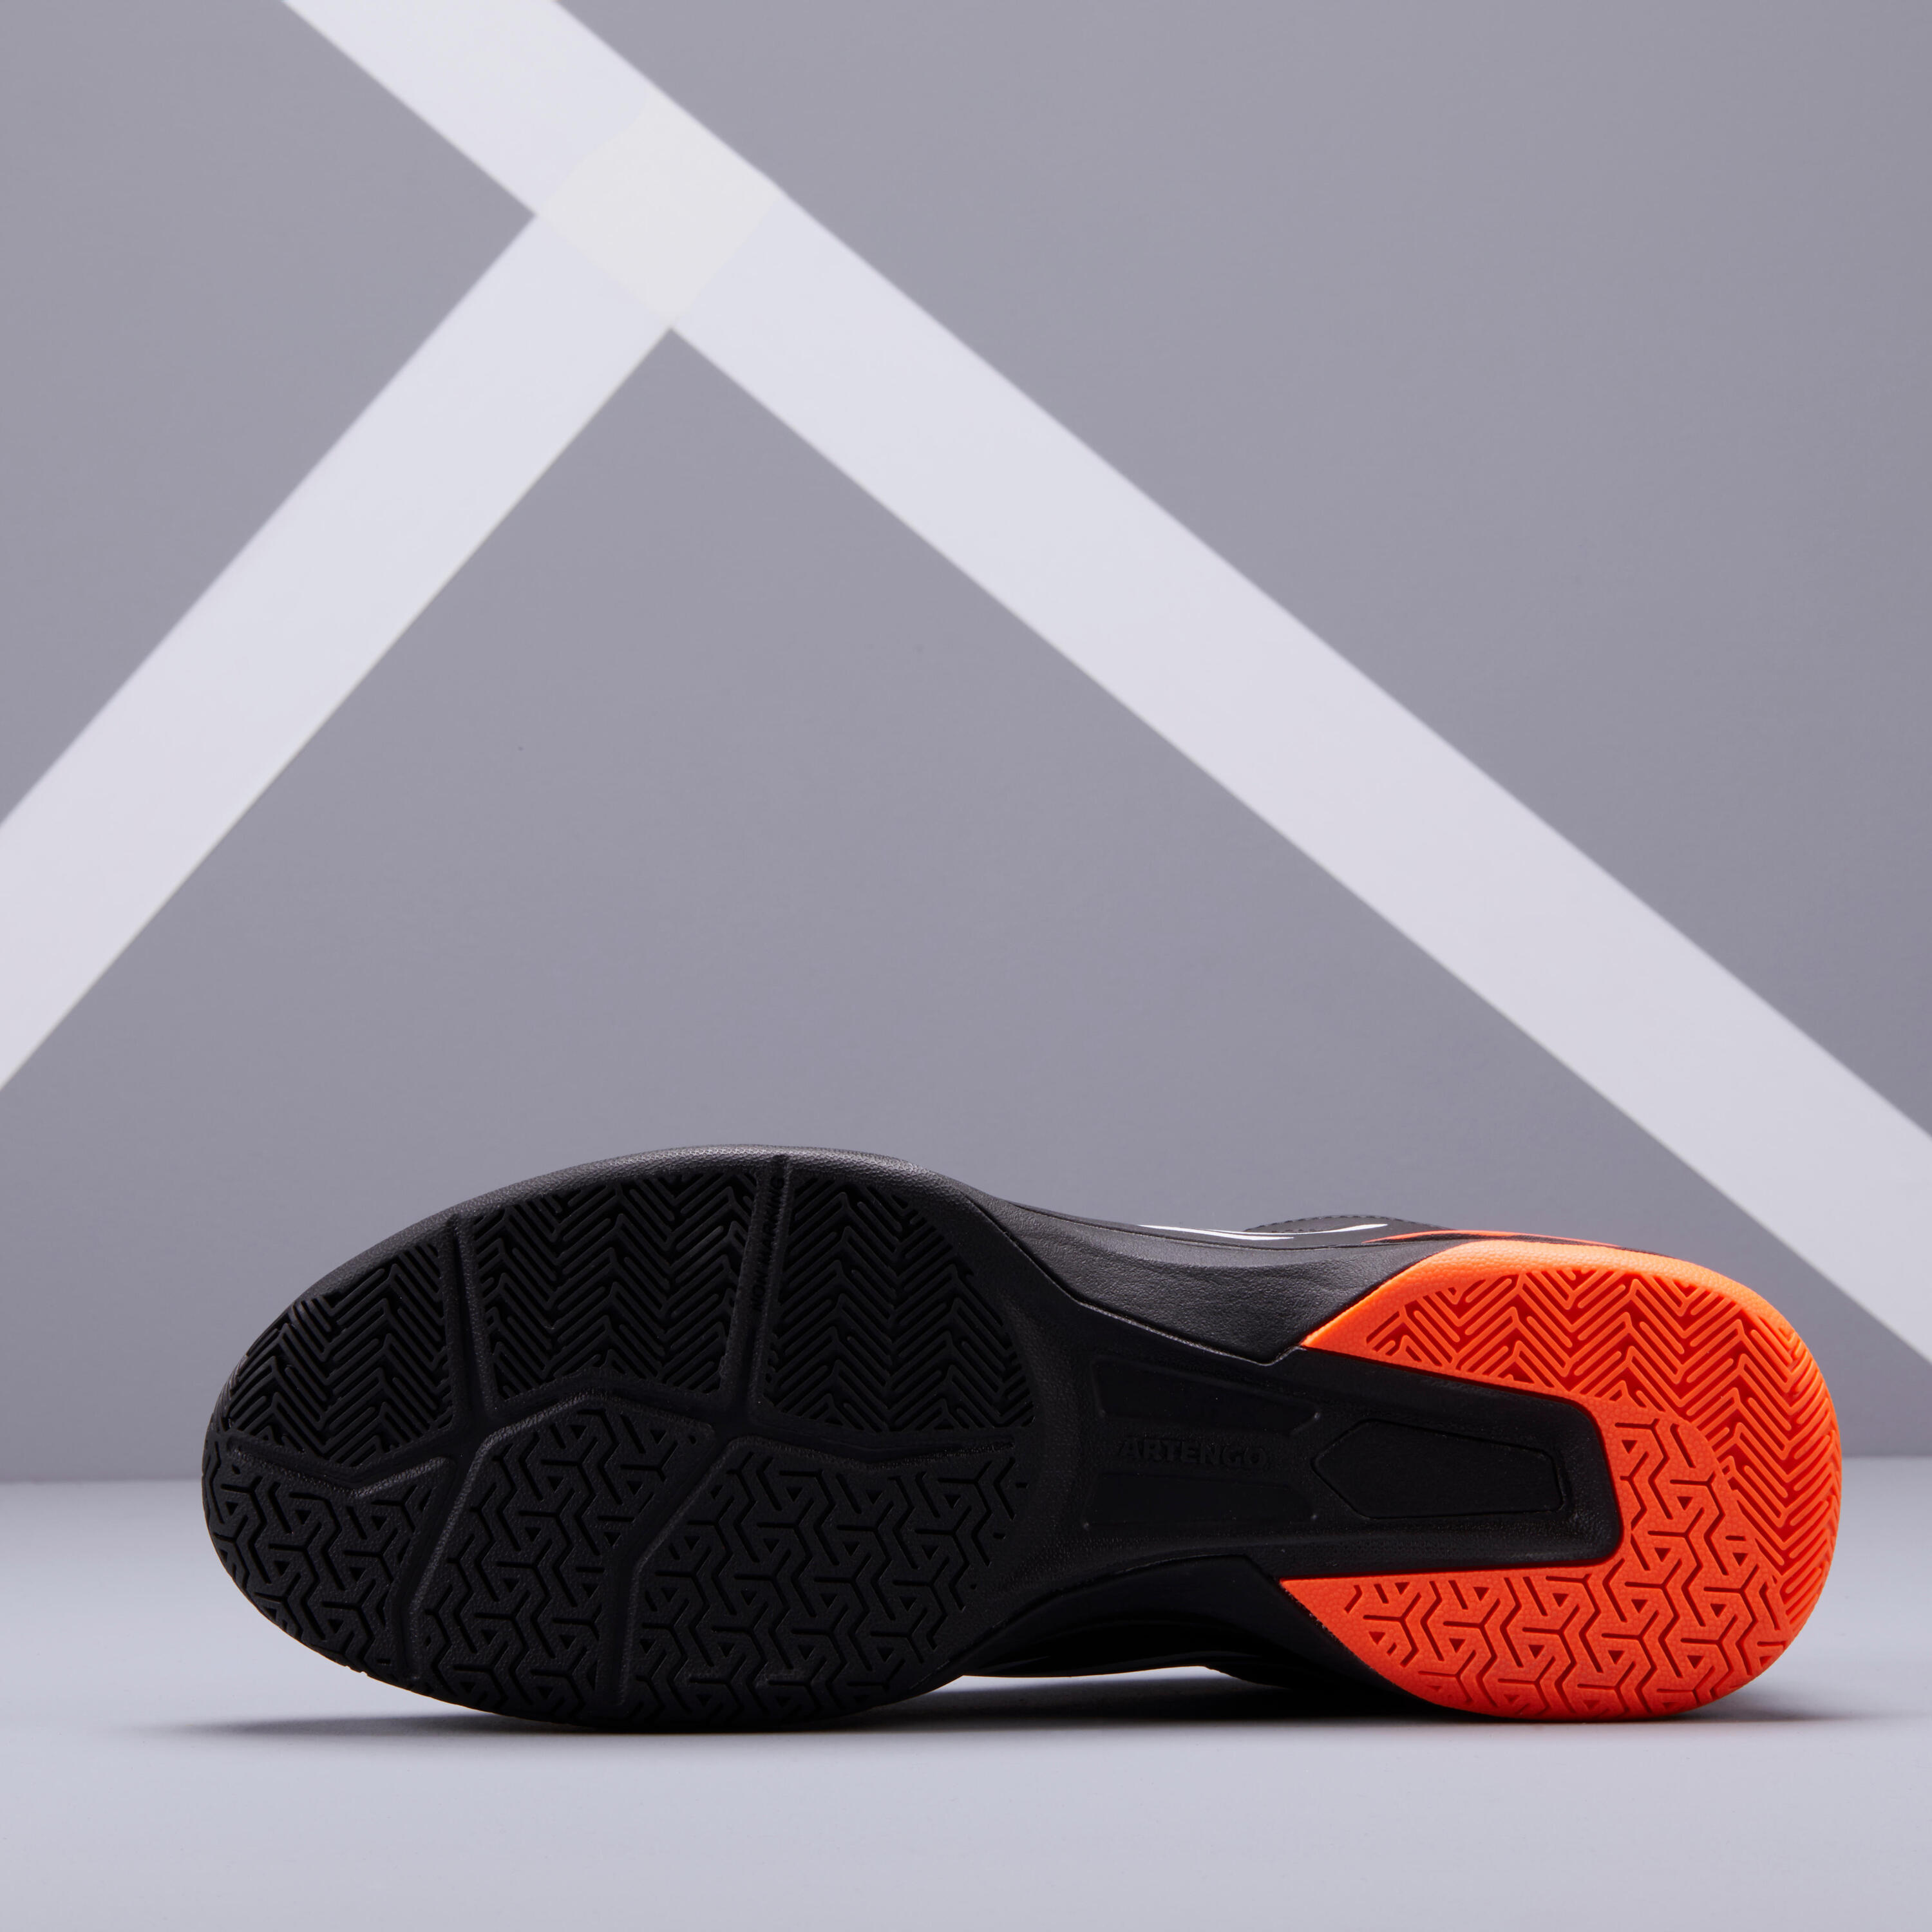 TS500 Multicourt Tennis Shoes - Black/Orange 4/8